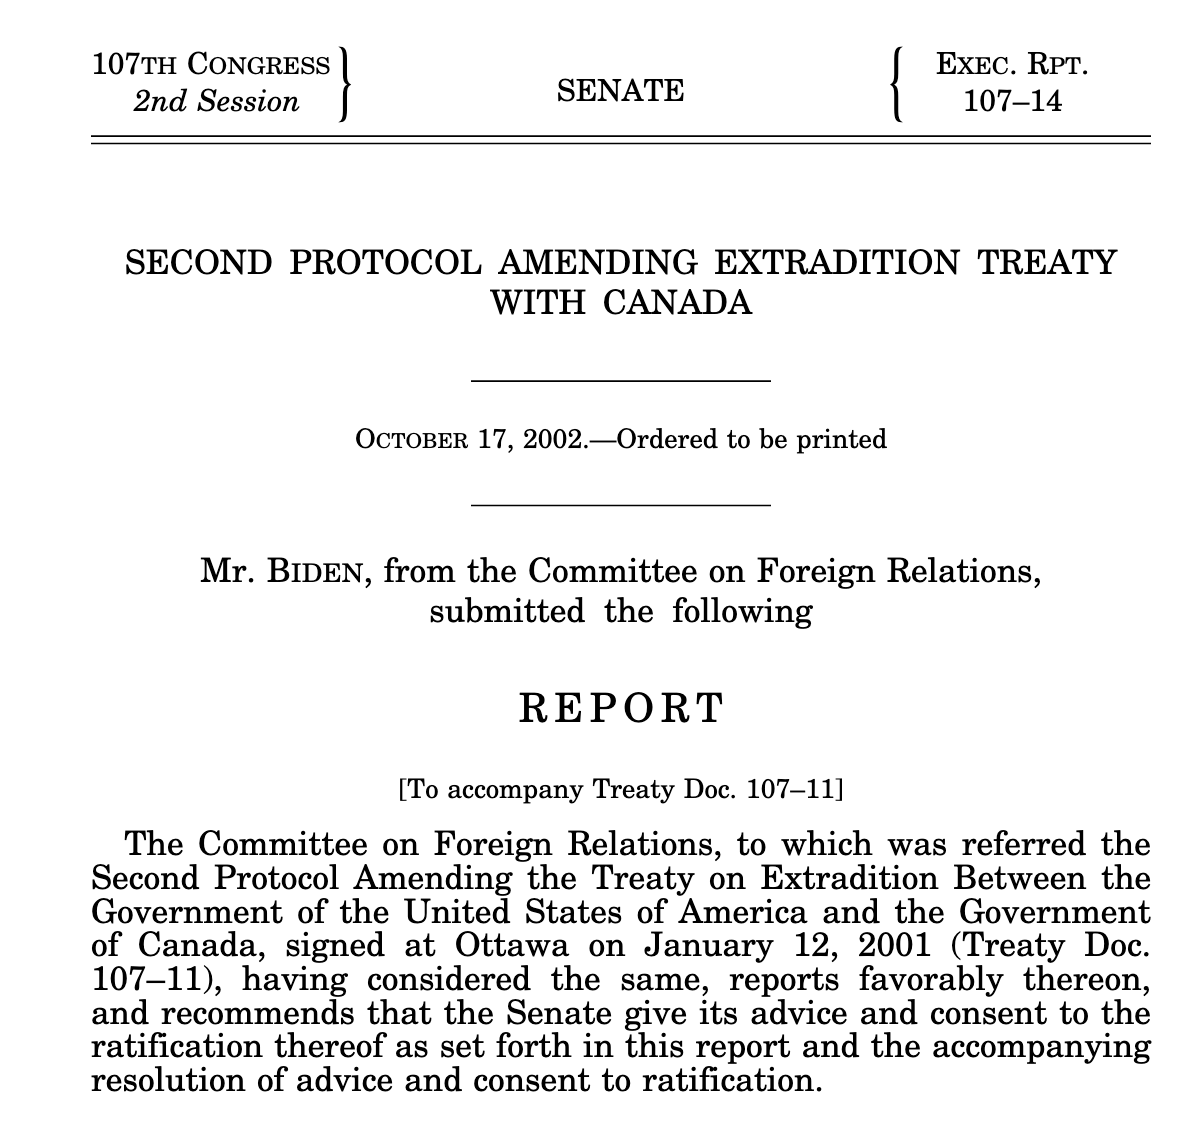 Our <a href="https://www.congress.gov/107/crpt/erpt14/CRPT-107erpt14.pdf">Extradition Treaty<br> with Canada</a>.